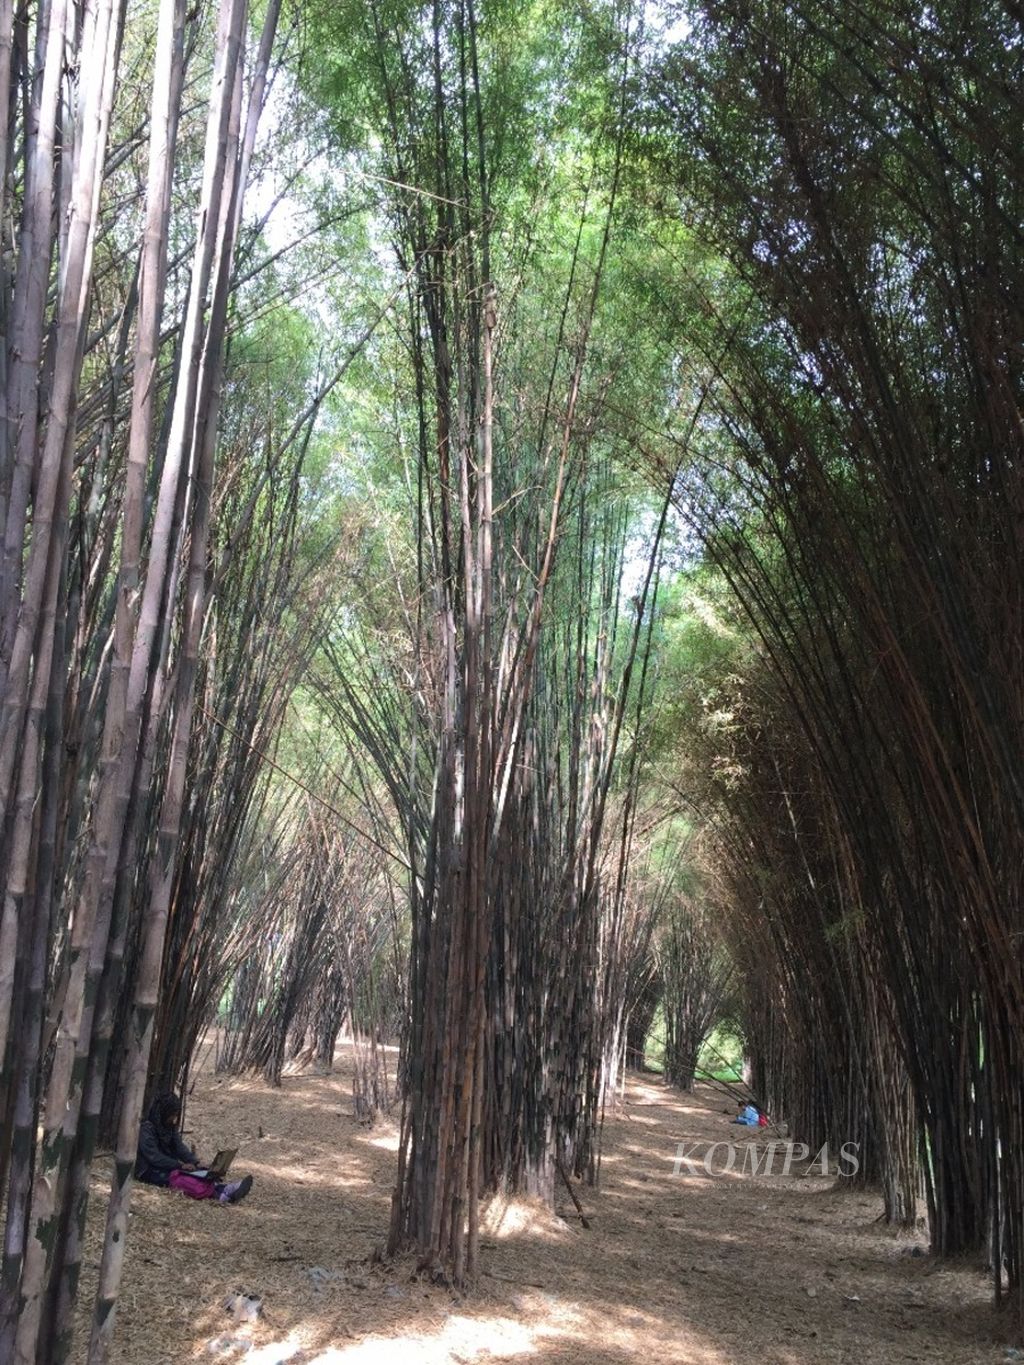 Hutan bambu di sekitar Taman Harmoni Keputih kini menjadi tempat warga Surabaya mencari inspirasi sekaligus rekreasi di taman seluas 8,6 hektar dan bekas tempat pembuangan akhir sampah warga Surabaya.